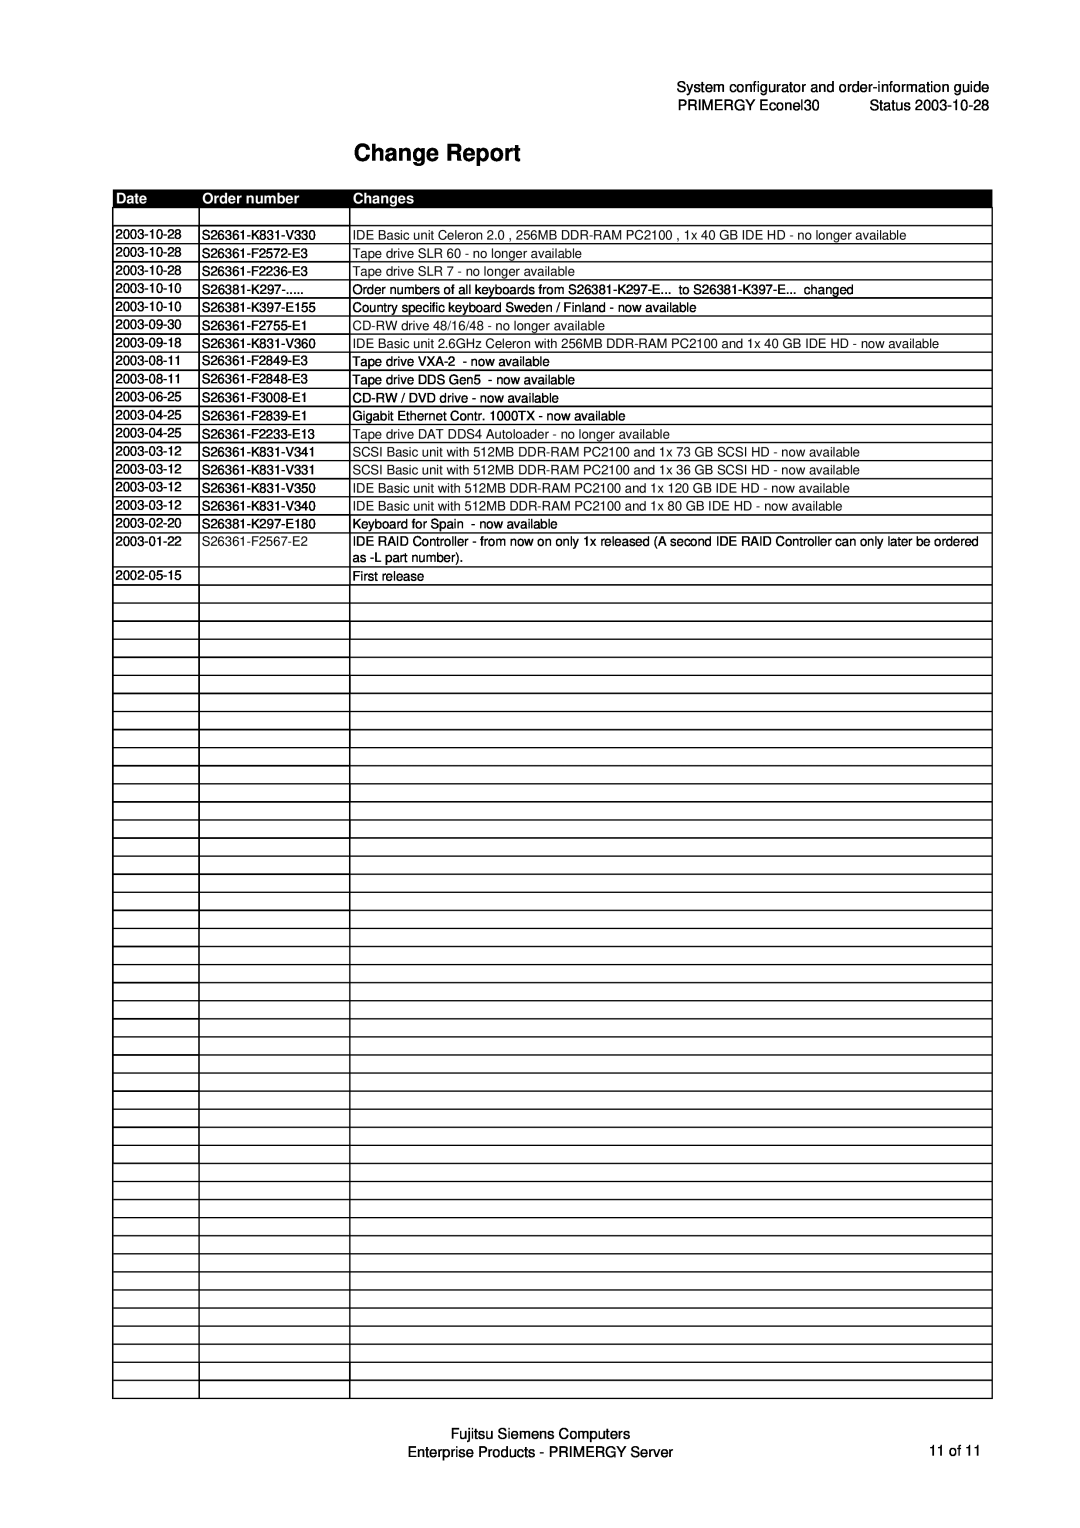 Fujitsu ECONEL30 manual Change Report, PRIMERGY Econel30, Date, Order number, Changes, Fujitsu Siemens Computers 